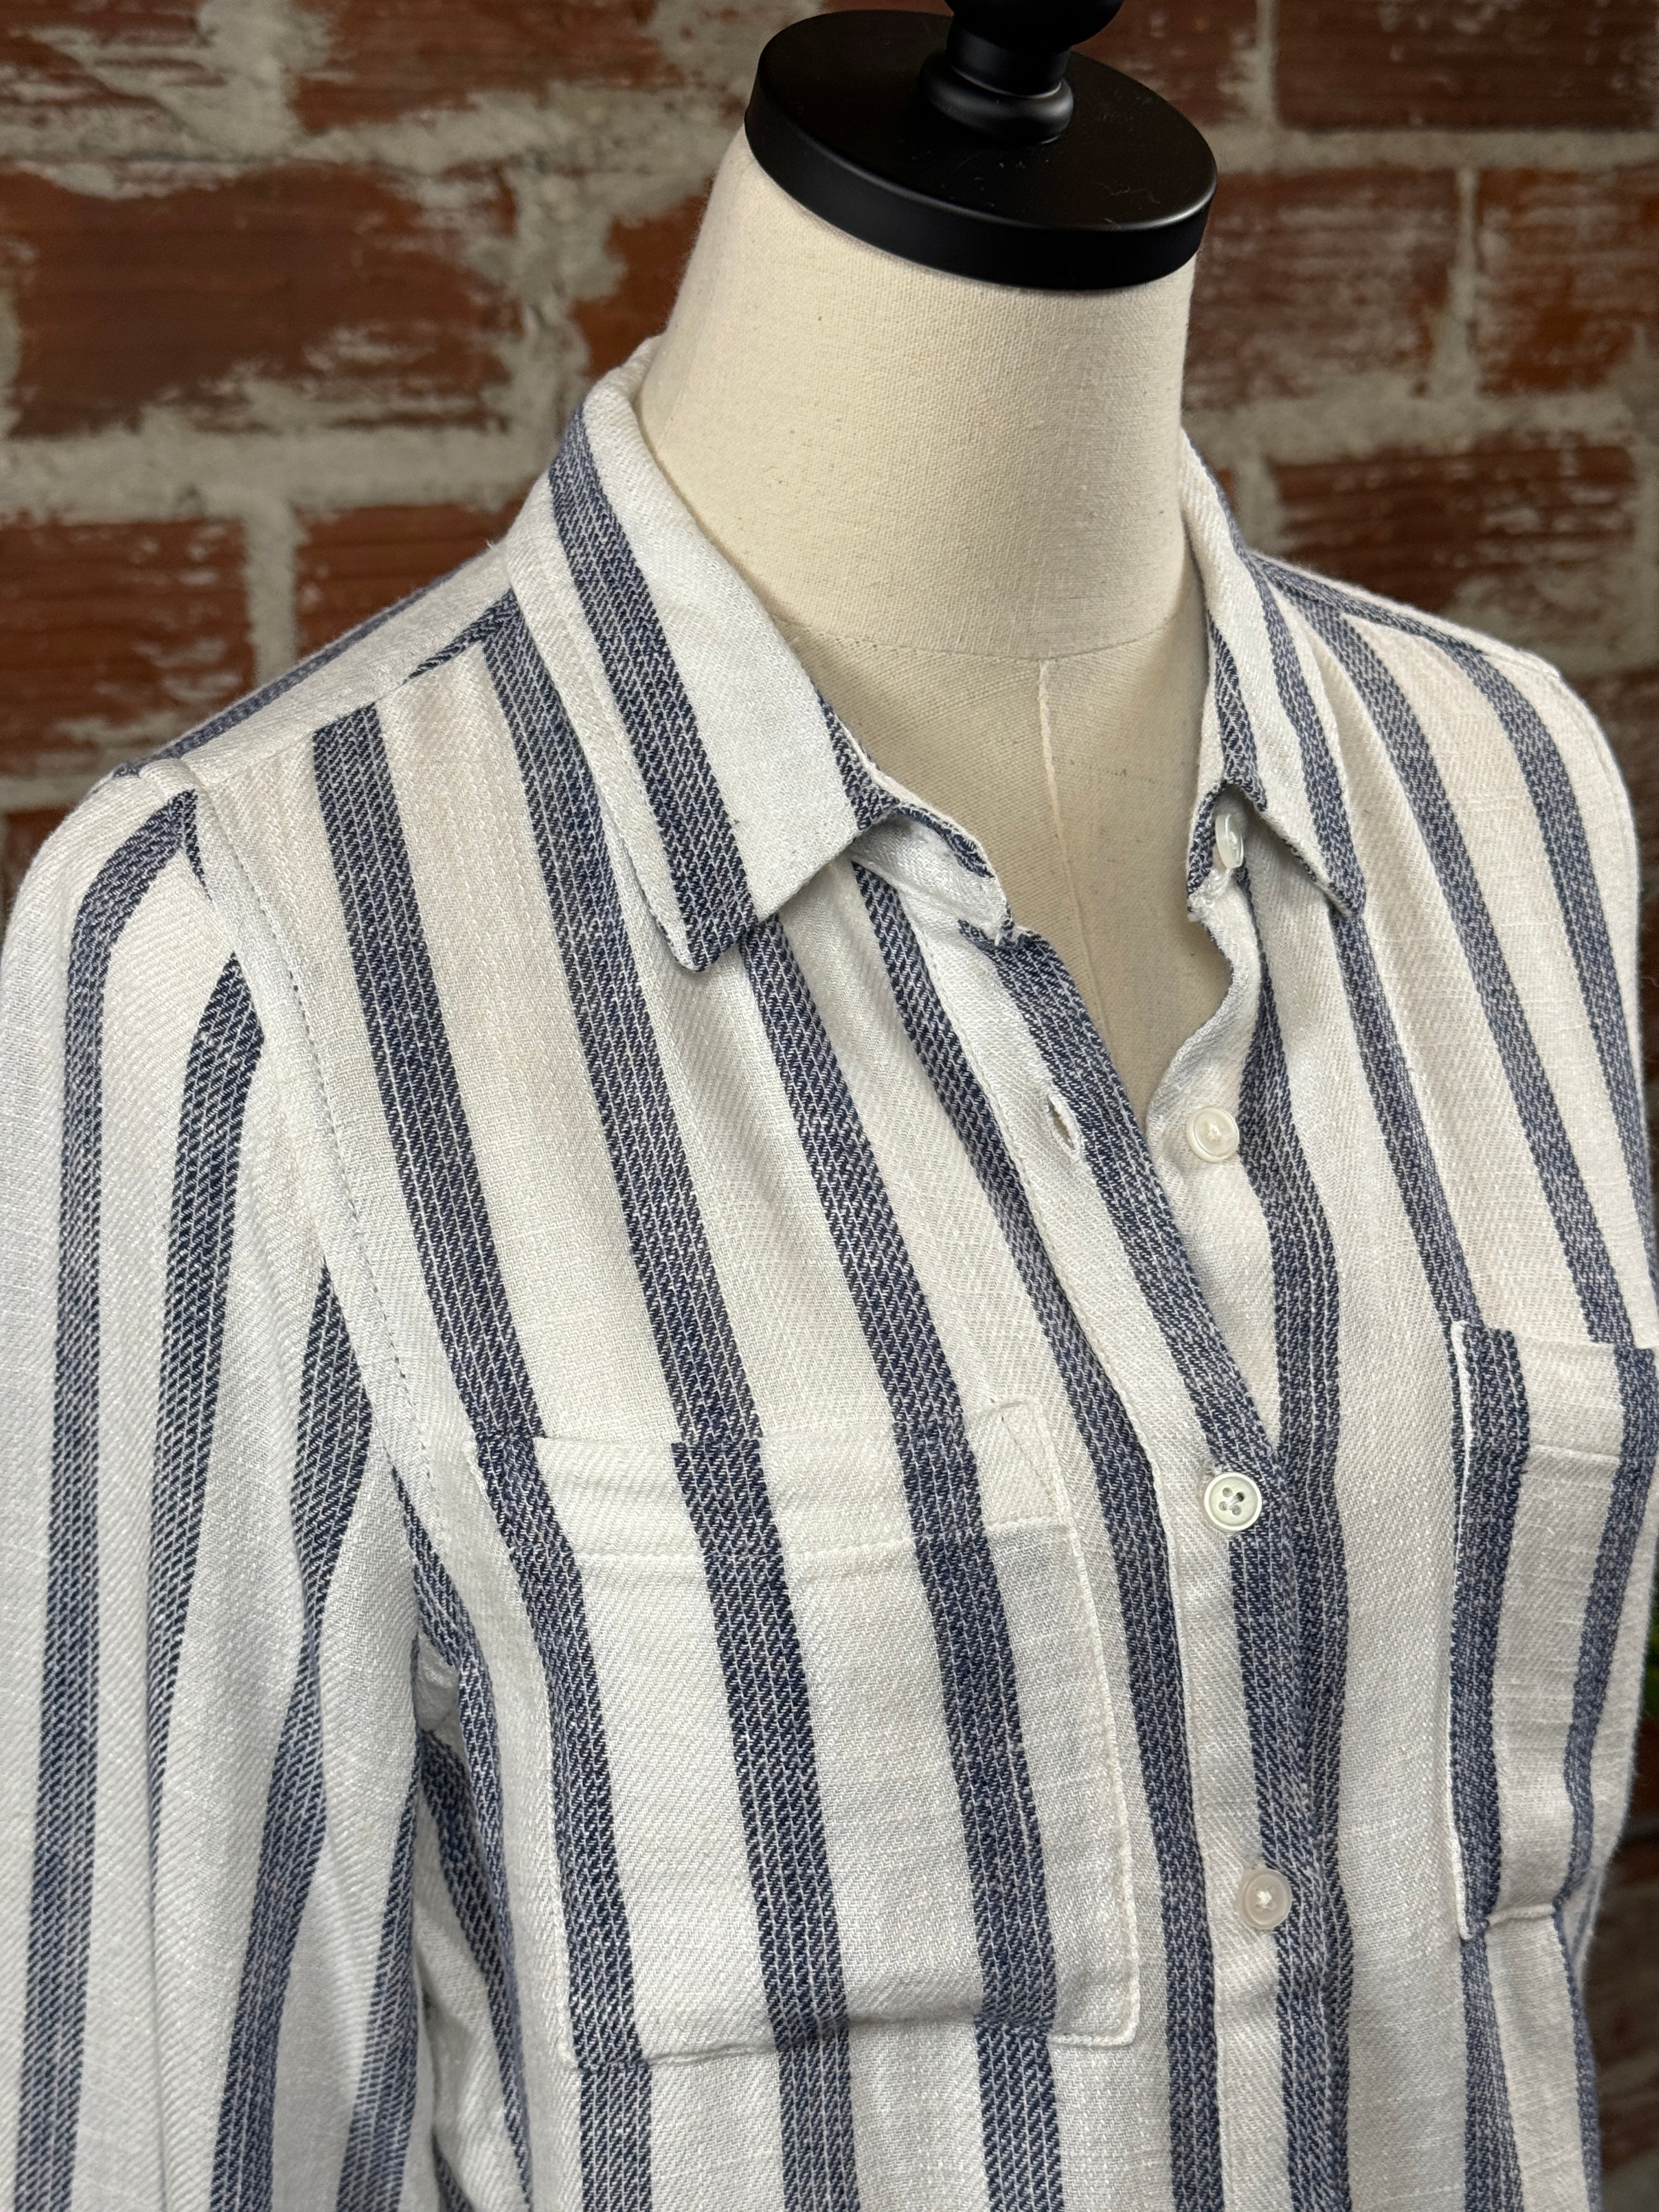 (Restock!) Thread & Supply Cleo Shirt in Navy Stripe-112 - Woven Top S/S (Jan - June)-Little Bird Boutique